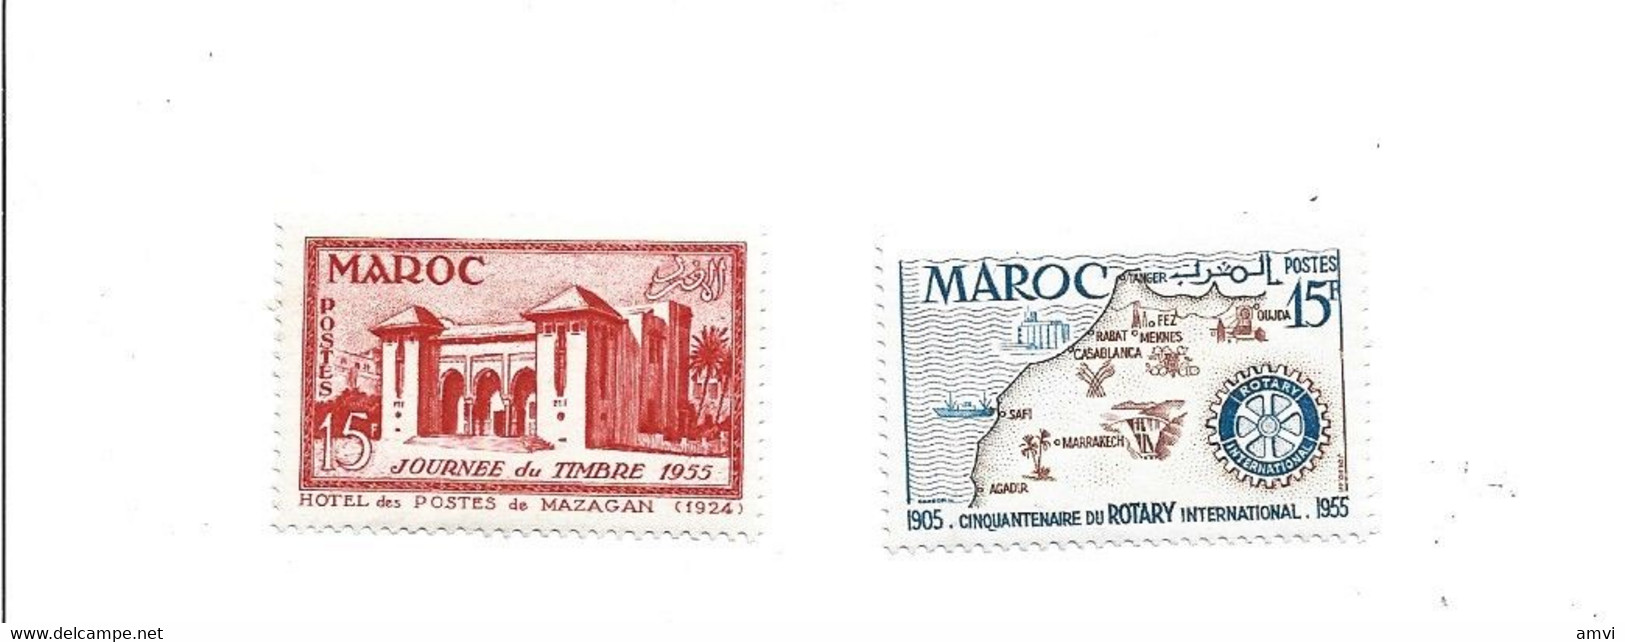 22- 5 - 1102 Maroc Timbres Neufs ** 344 Et 343  Centenaire Du Rotary International - HOTEL DES POSTES DE MAZAGAN - Neufs